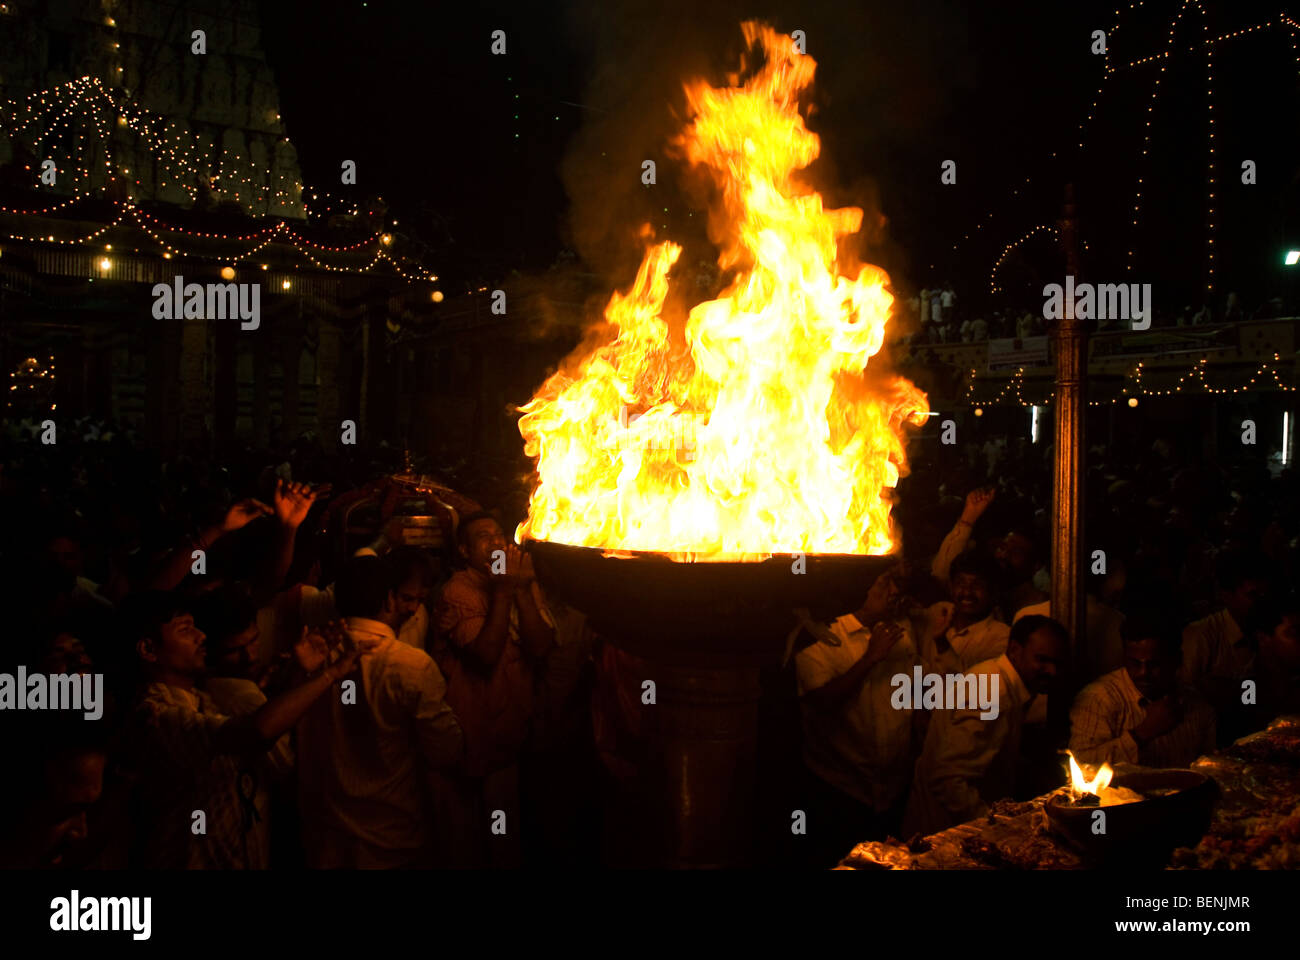 Karthigai Deepam Festival feierte im Tamil Monat des Karthigai (November - Dezember) beginnt am Uttradam Tag mit Flagge Stockfoto